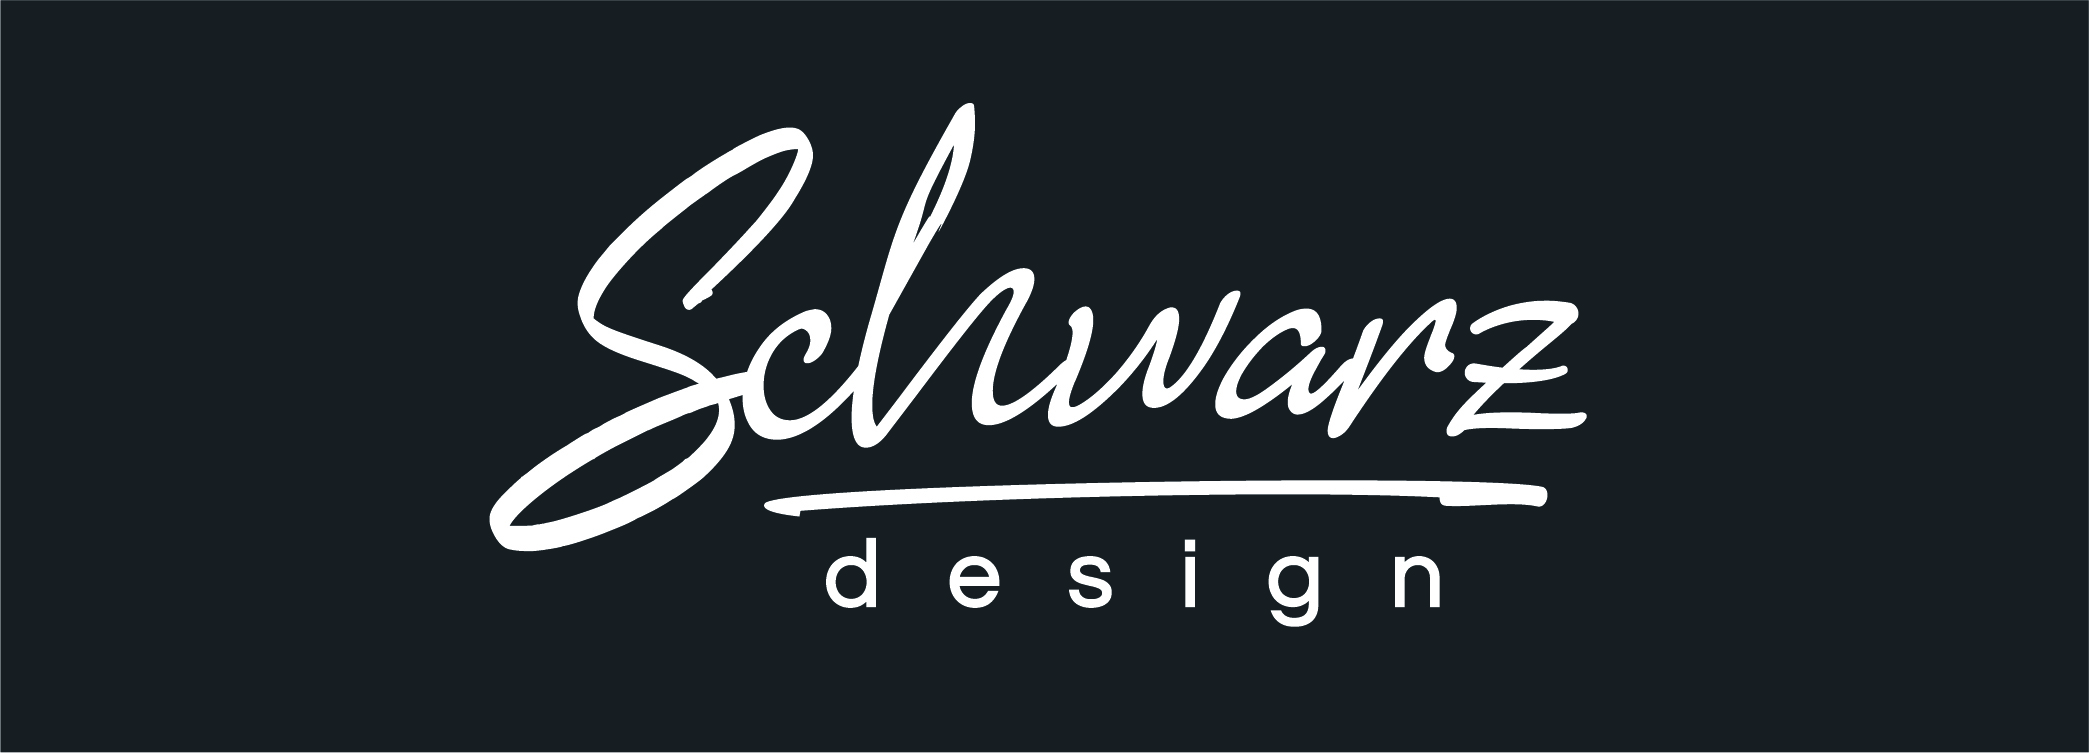 SchwarzDesign.cz - logo